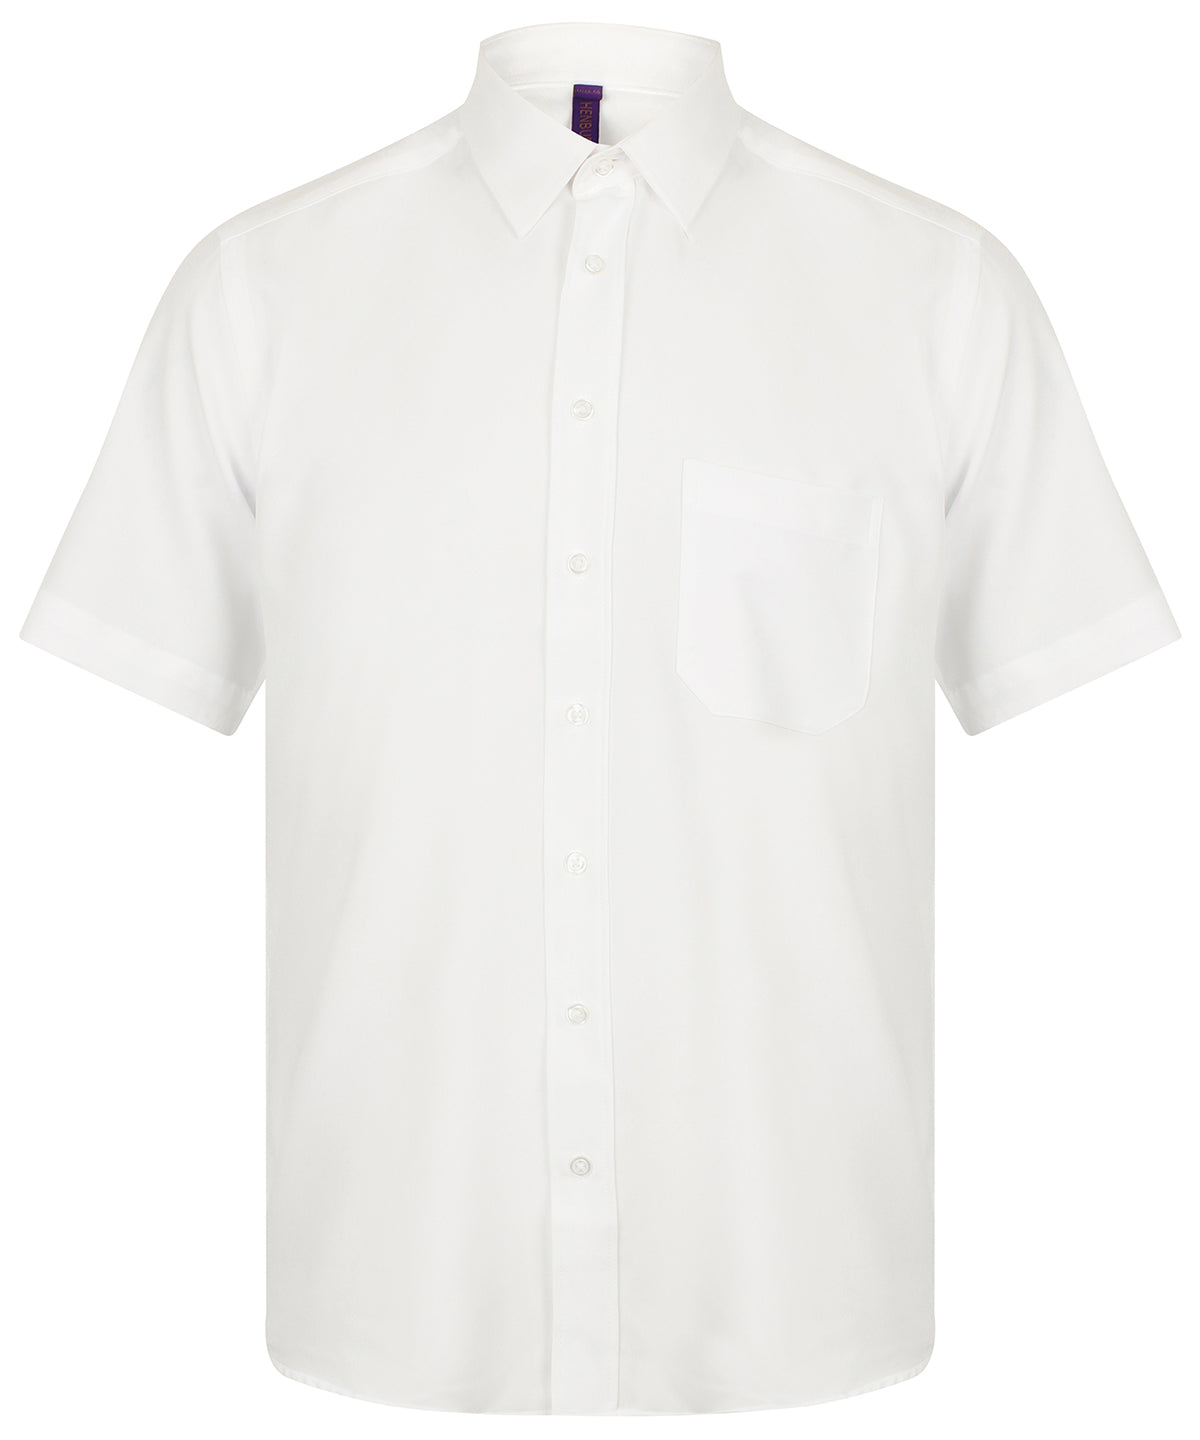 Bolir - Wicking Antibacterial Short Sleeve Shirt